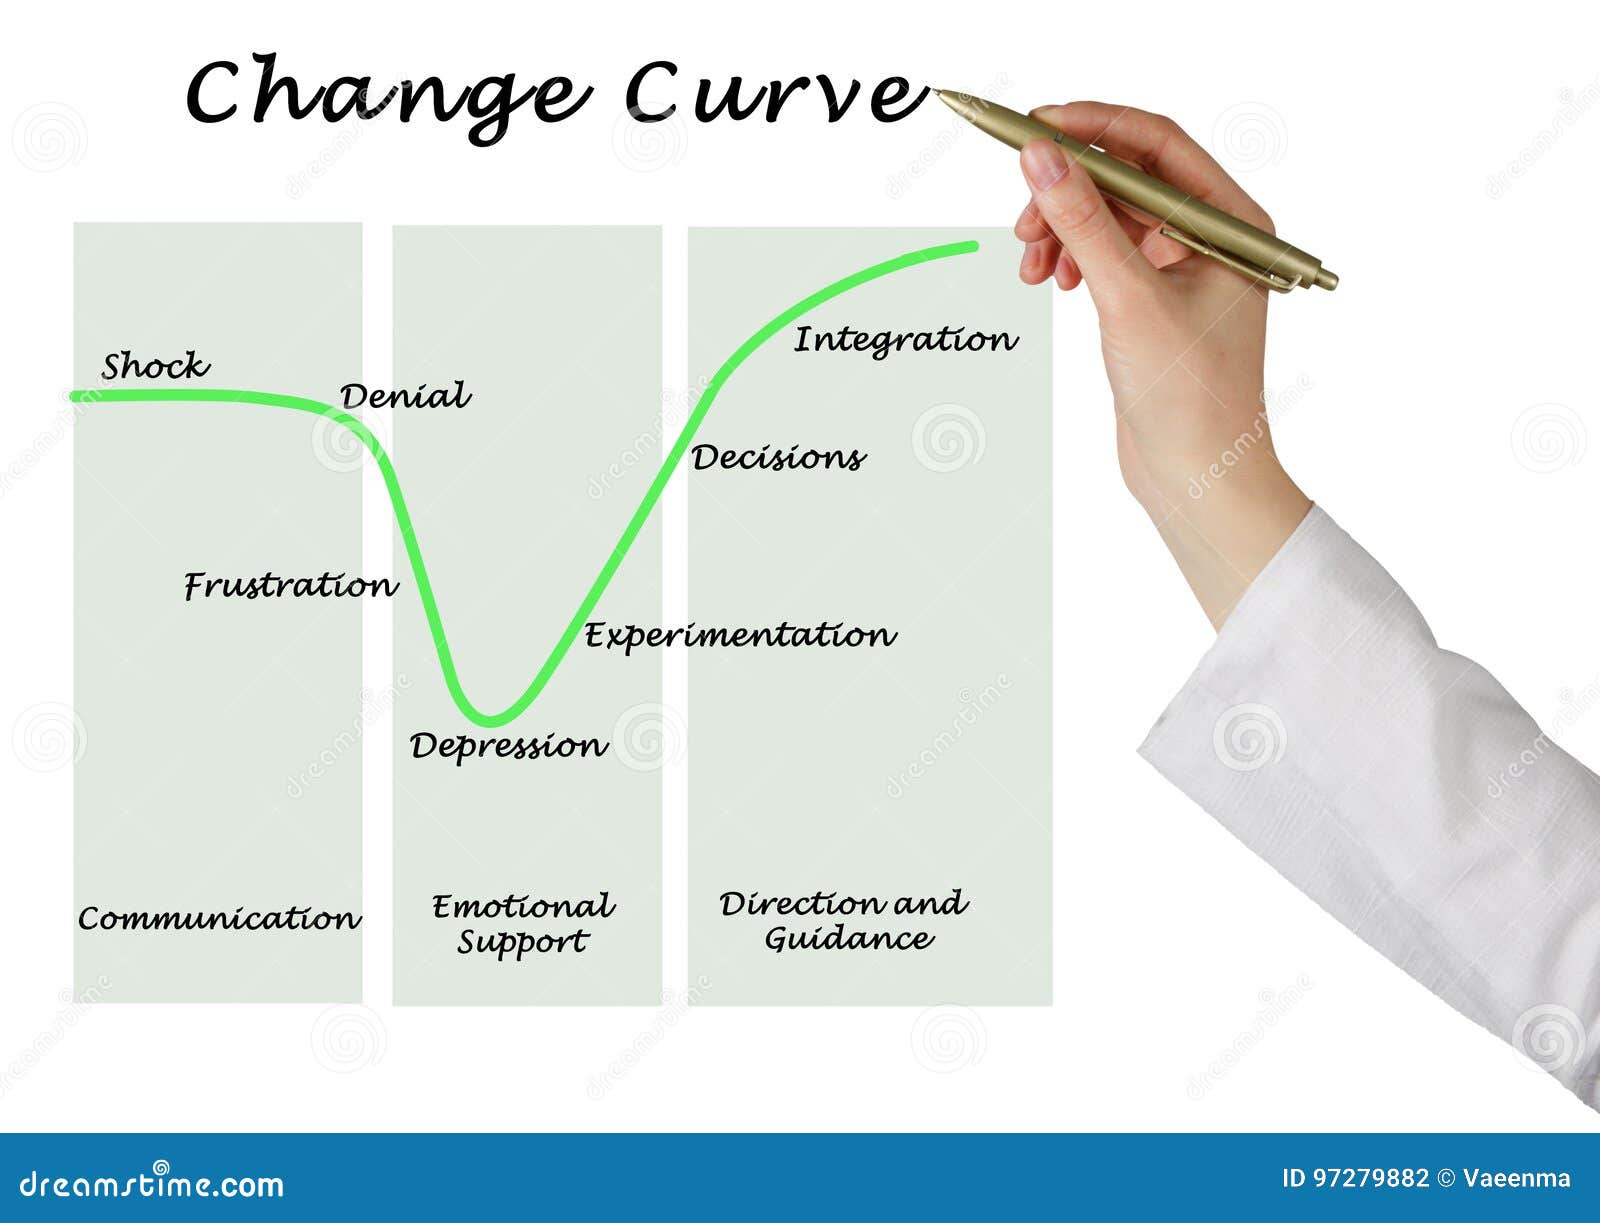 change curve